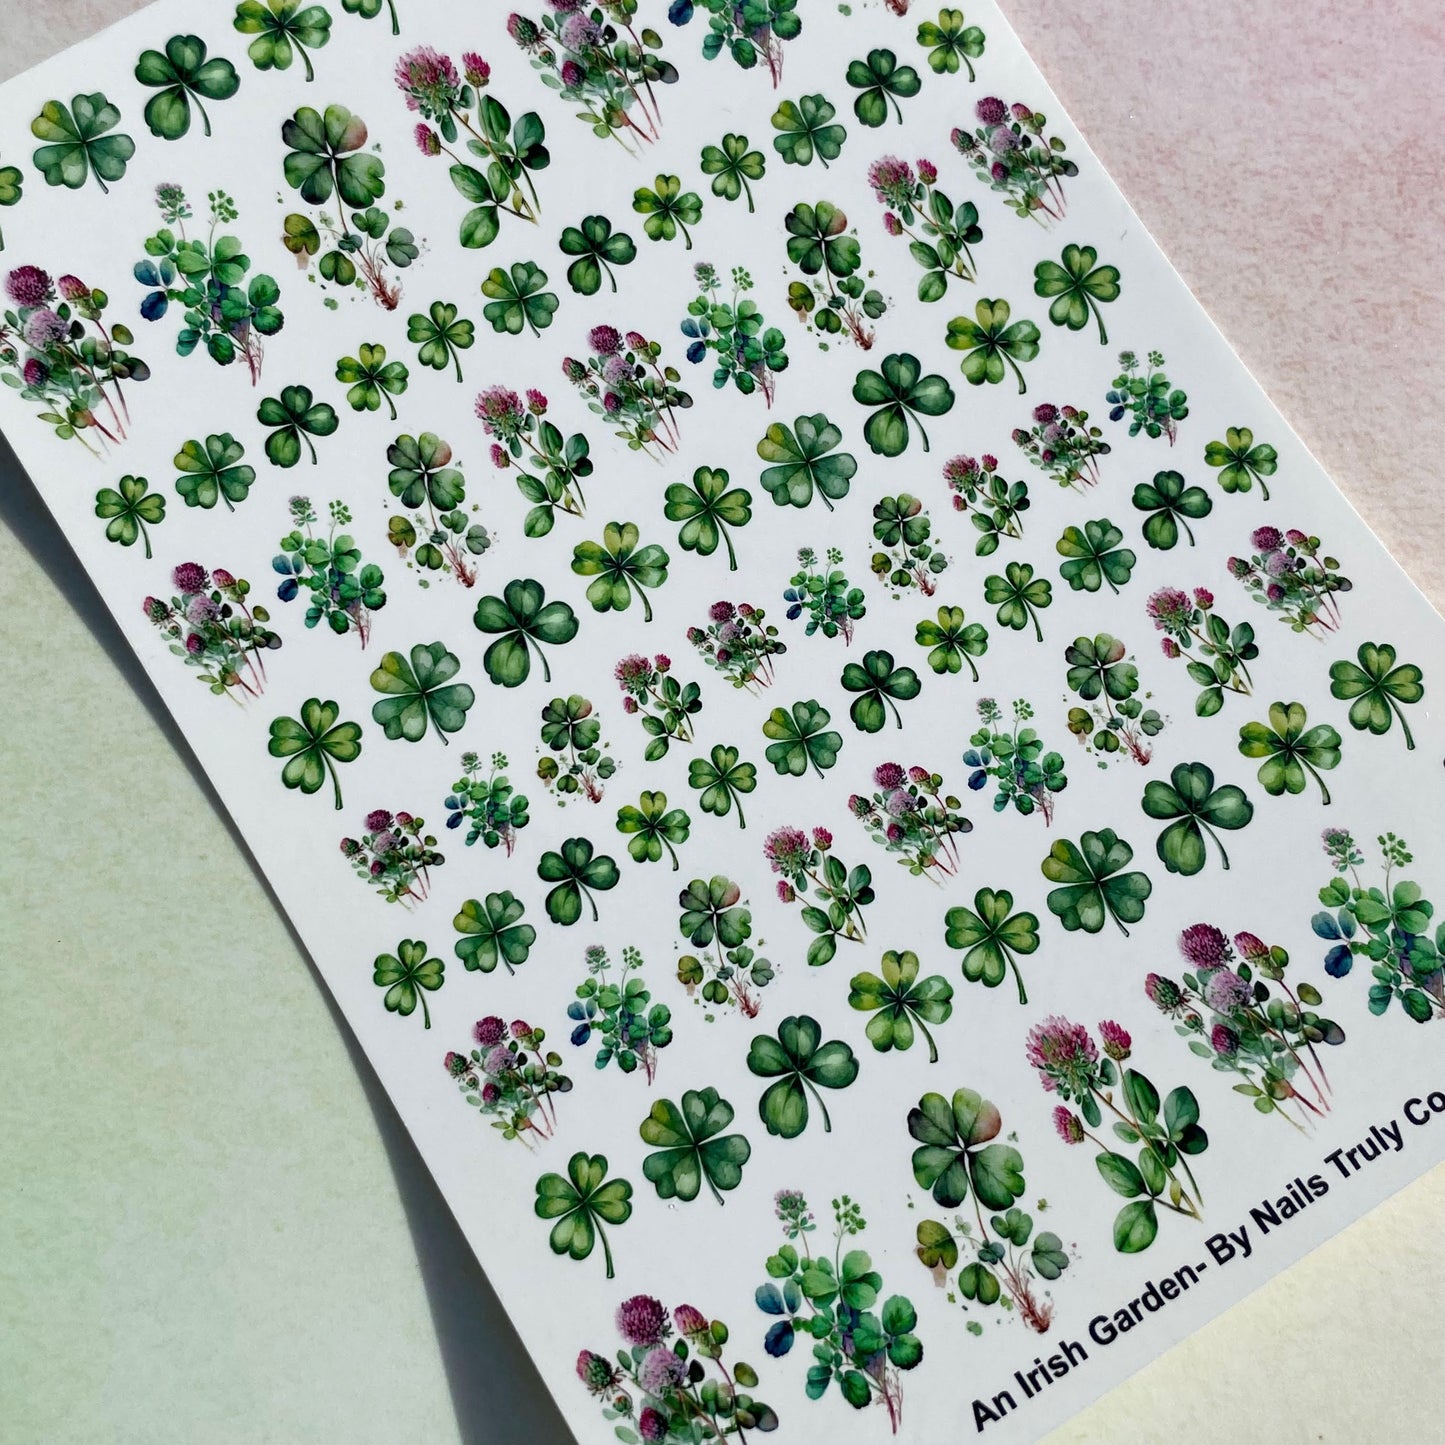 St. Patrick's Day Nail Art - An Irish Garden